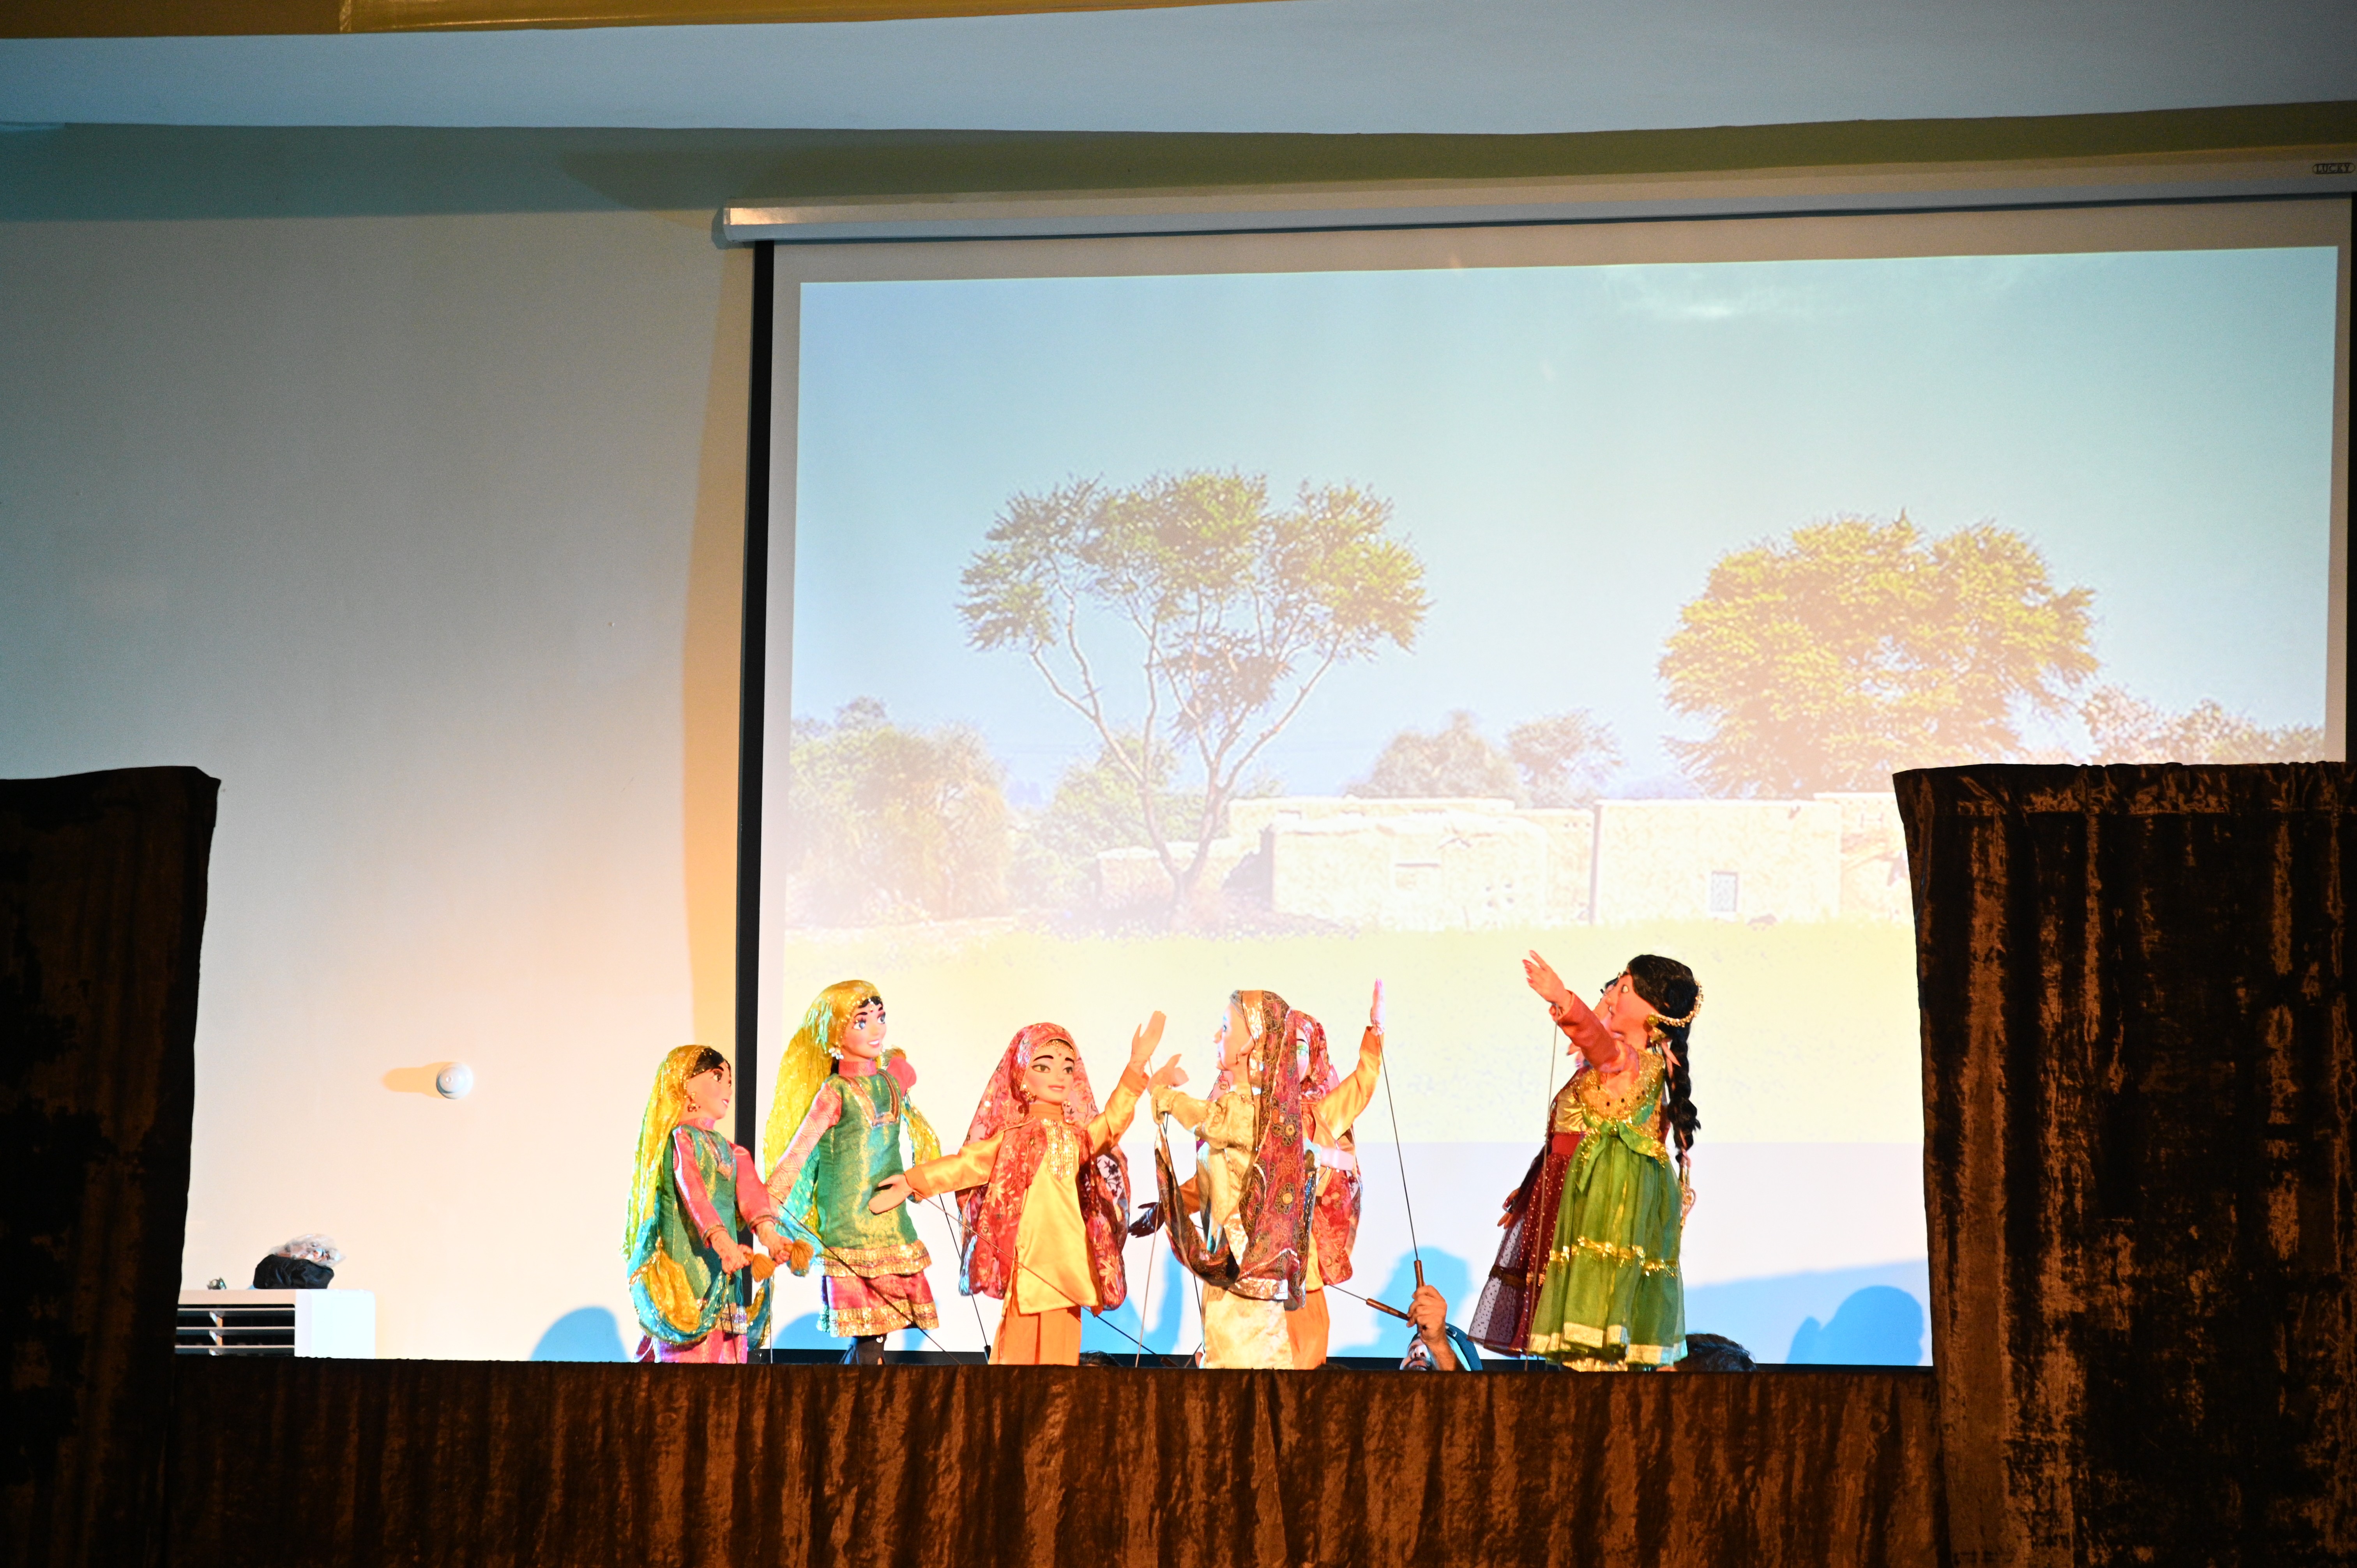 puppets of punjabi women symbolizing the culture of punjab